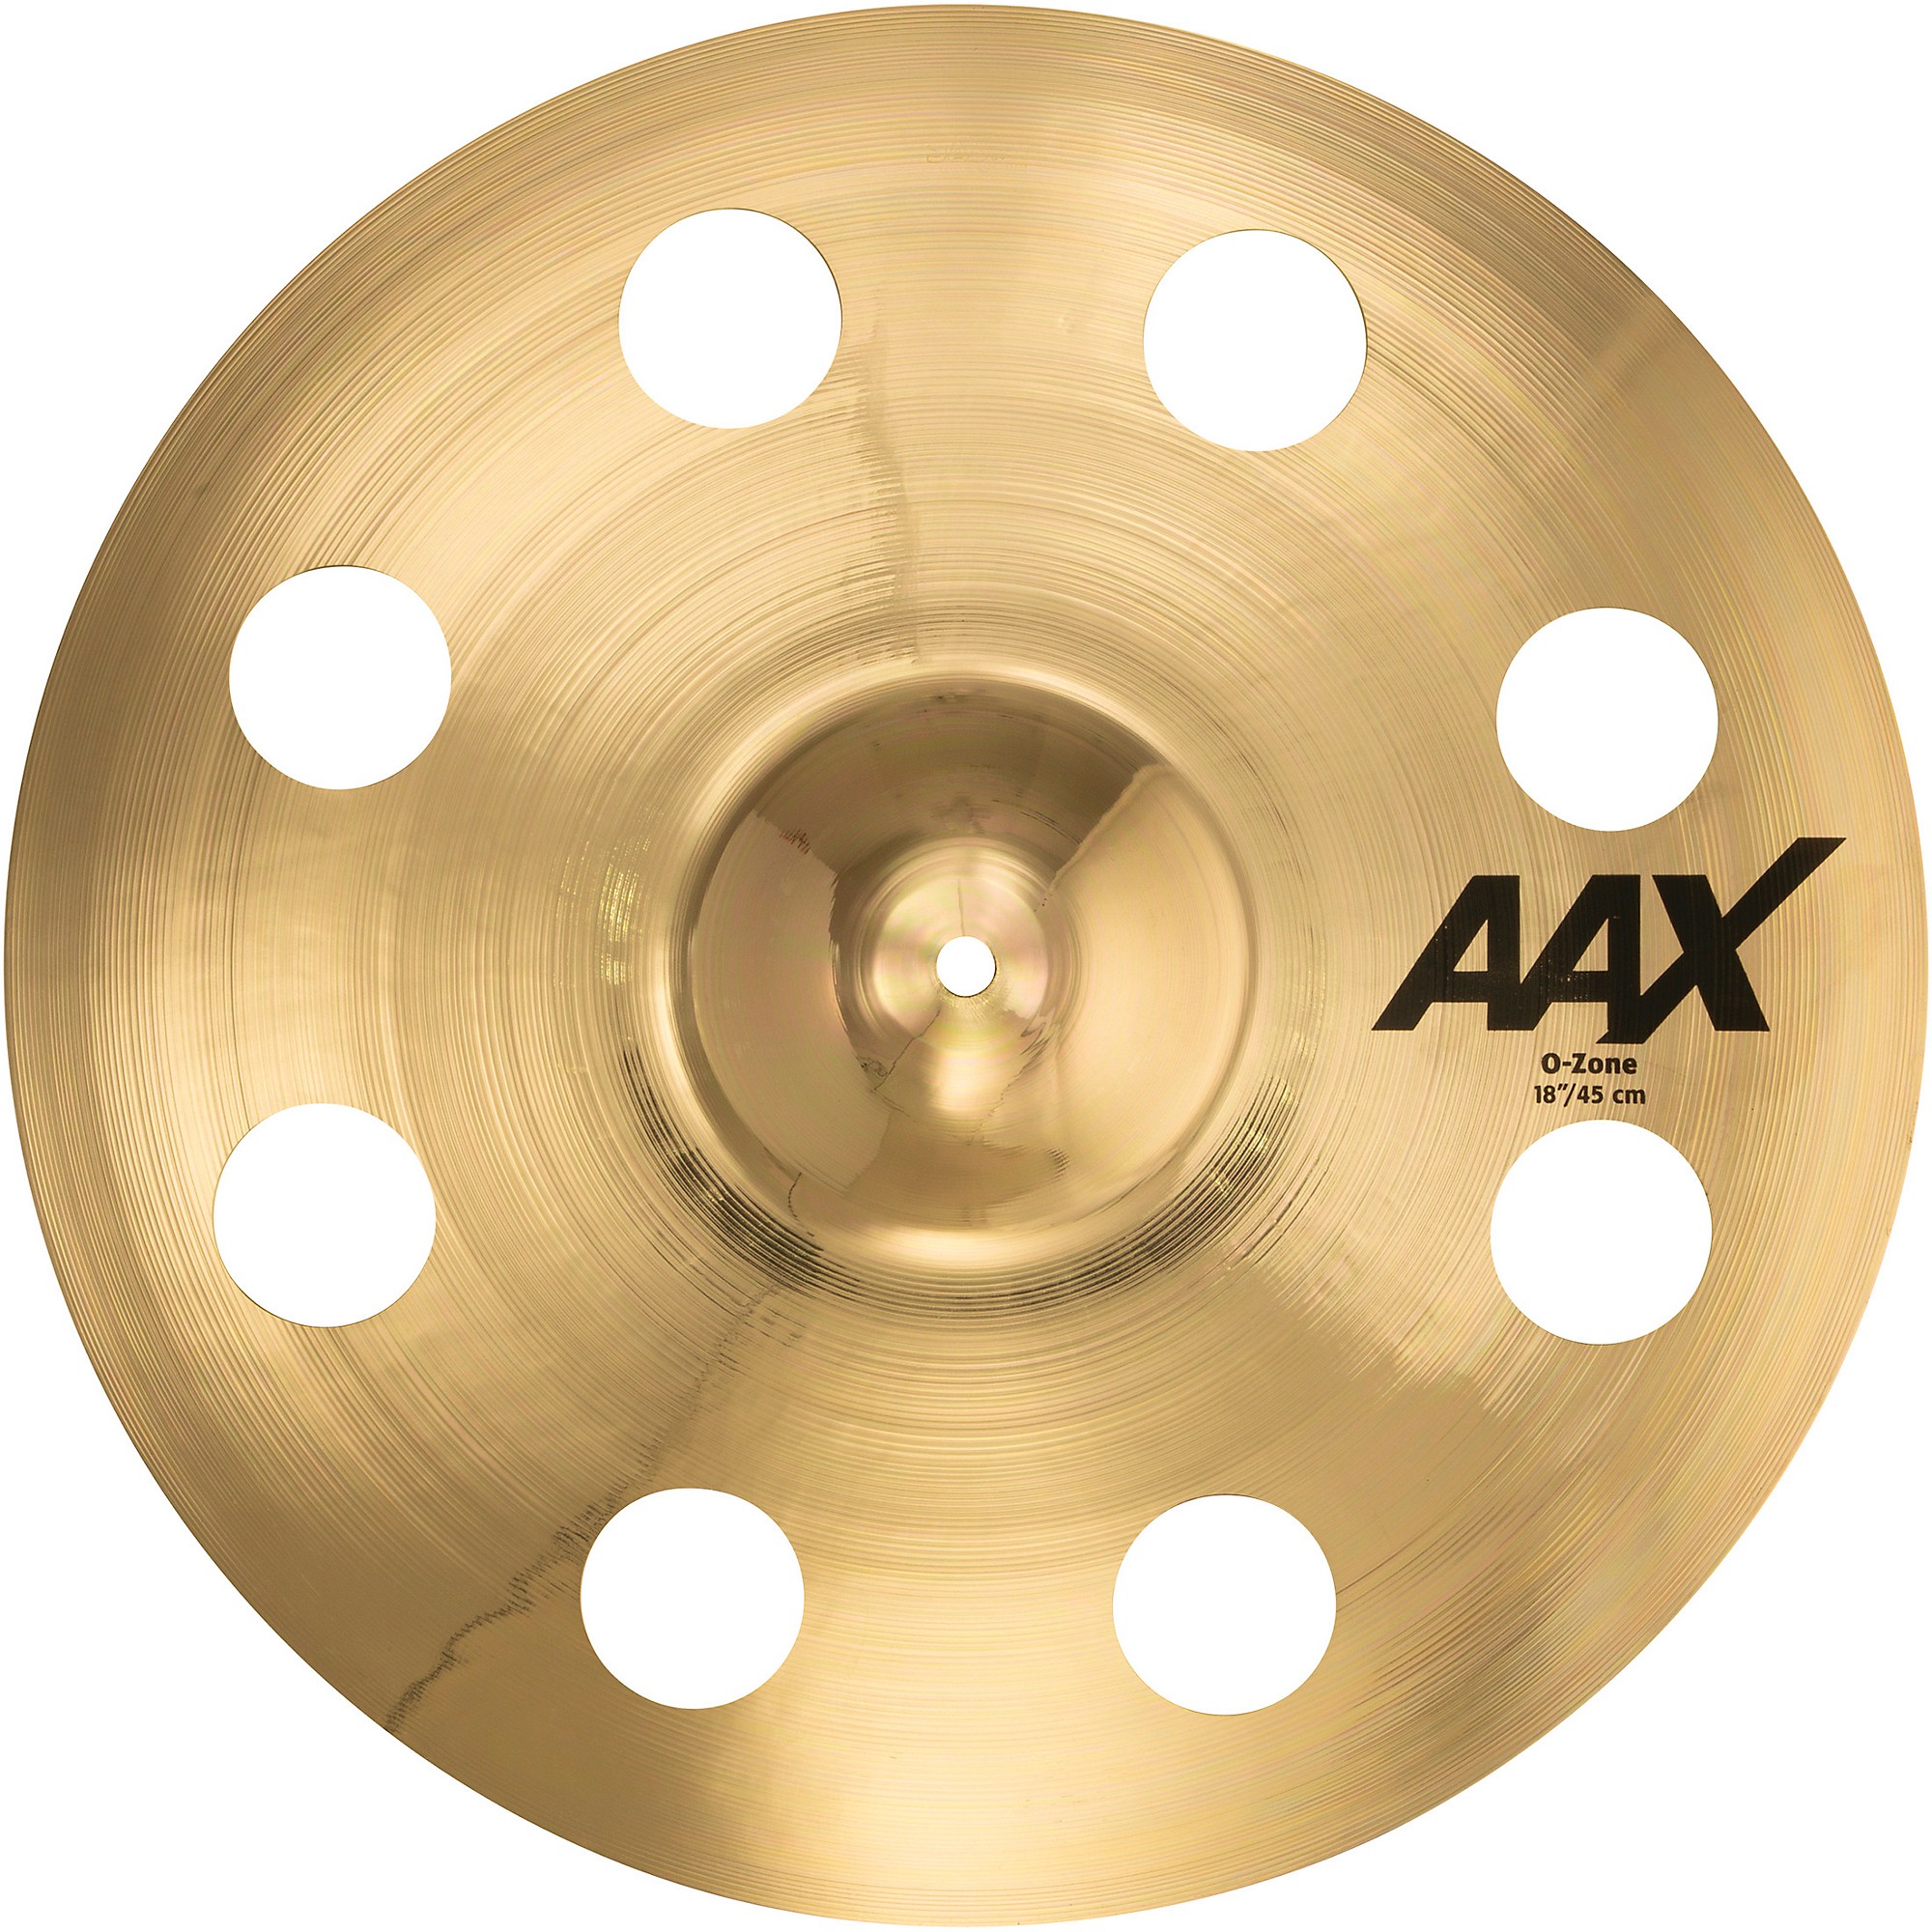 SABIAN AAX O-Zone Crash Brilliant Cymbal 18 in. | Guitar Center